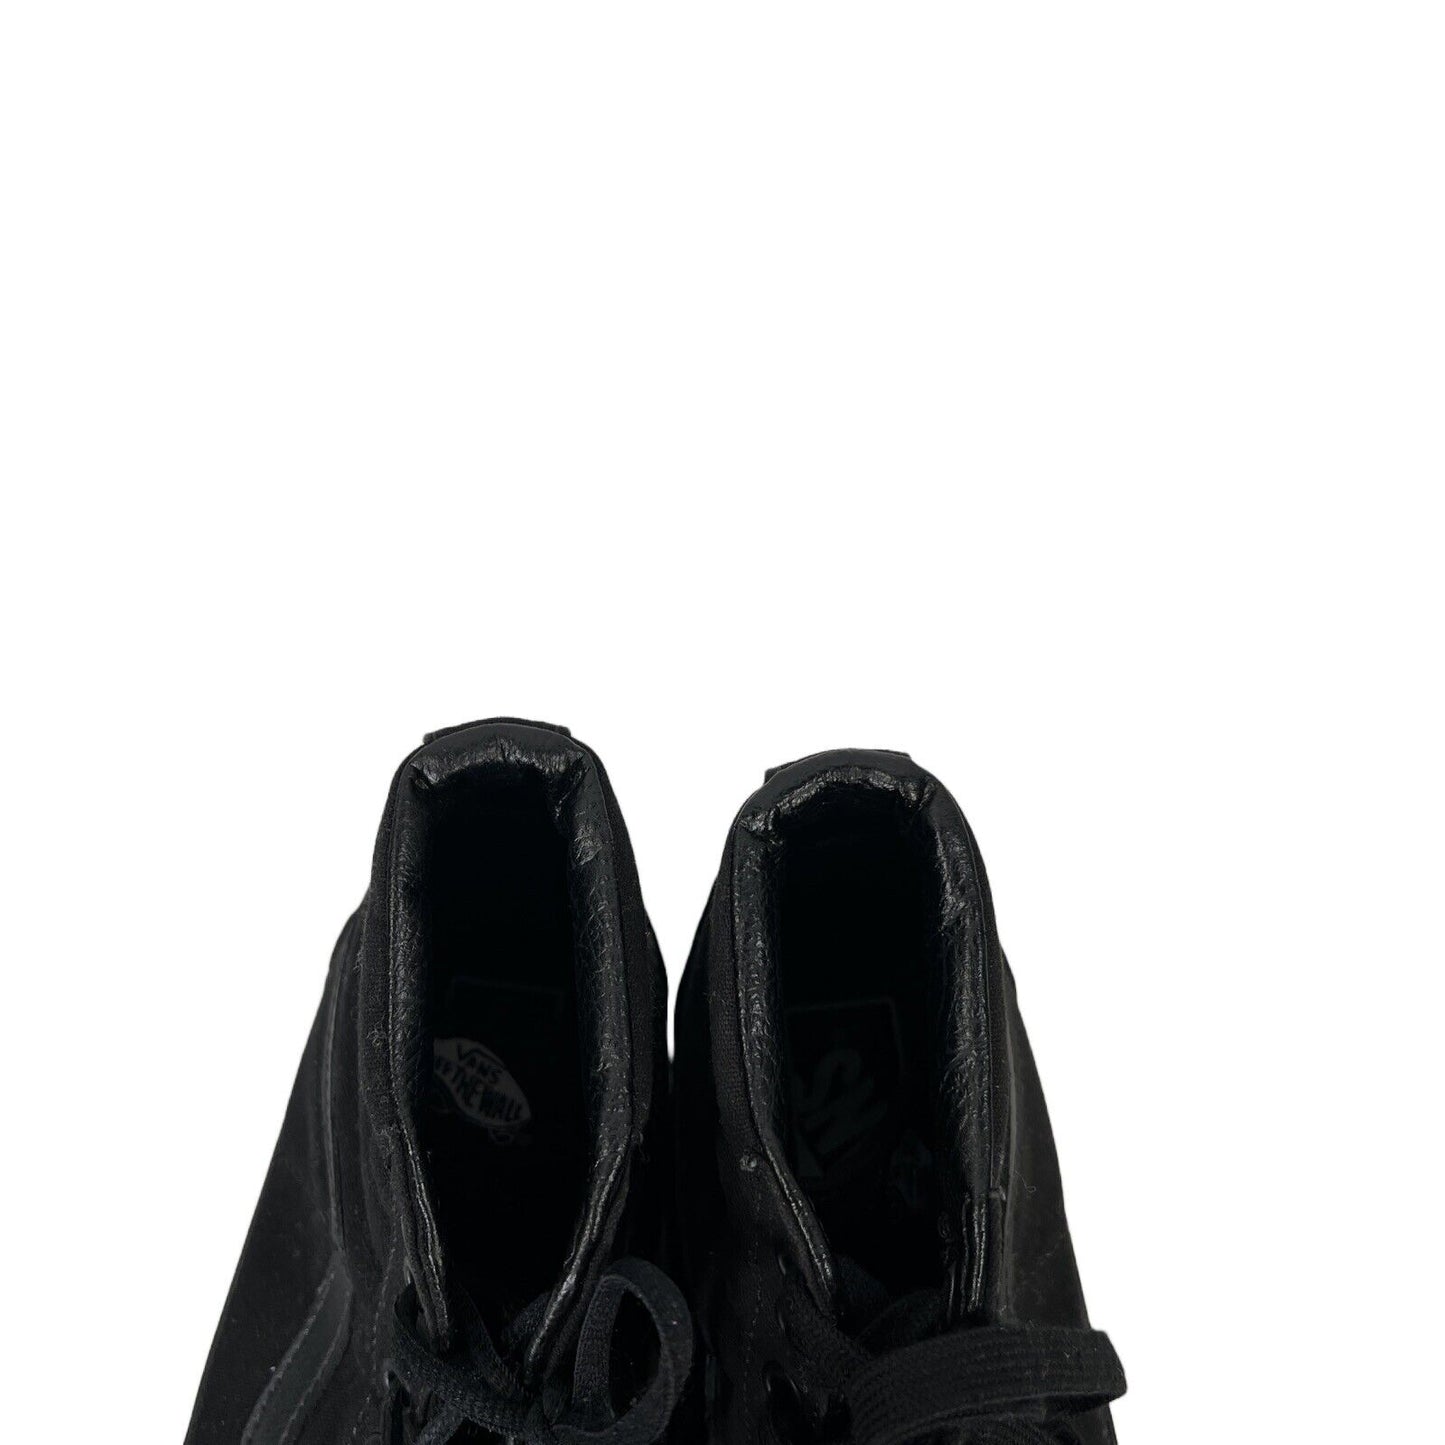 Vans Unisex Black Canvas Sk8 Hi-Top Lace Up Sneakers - Women's 7